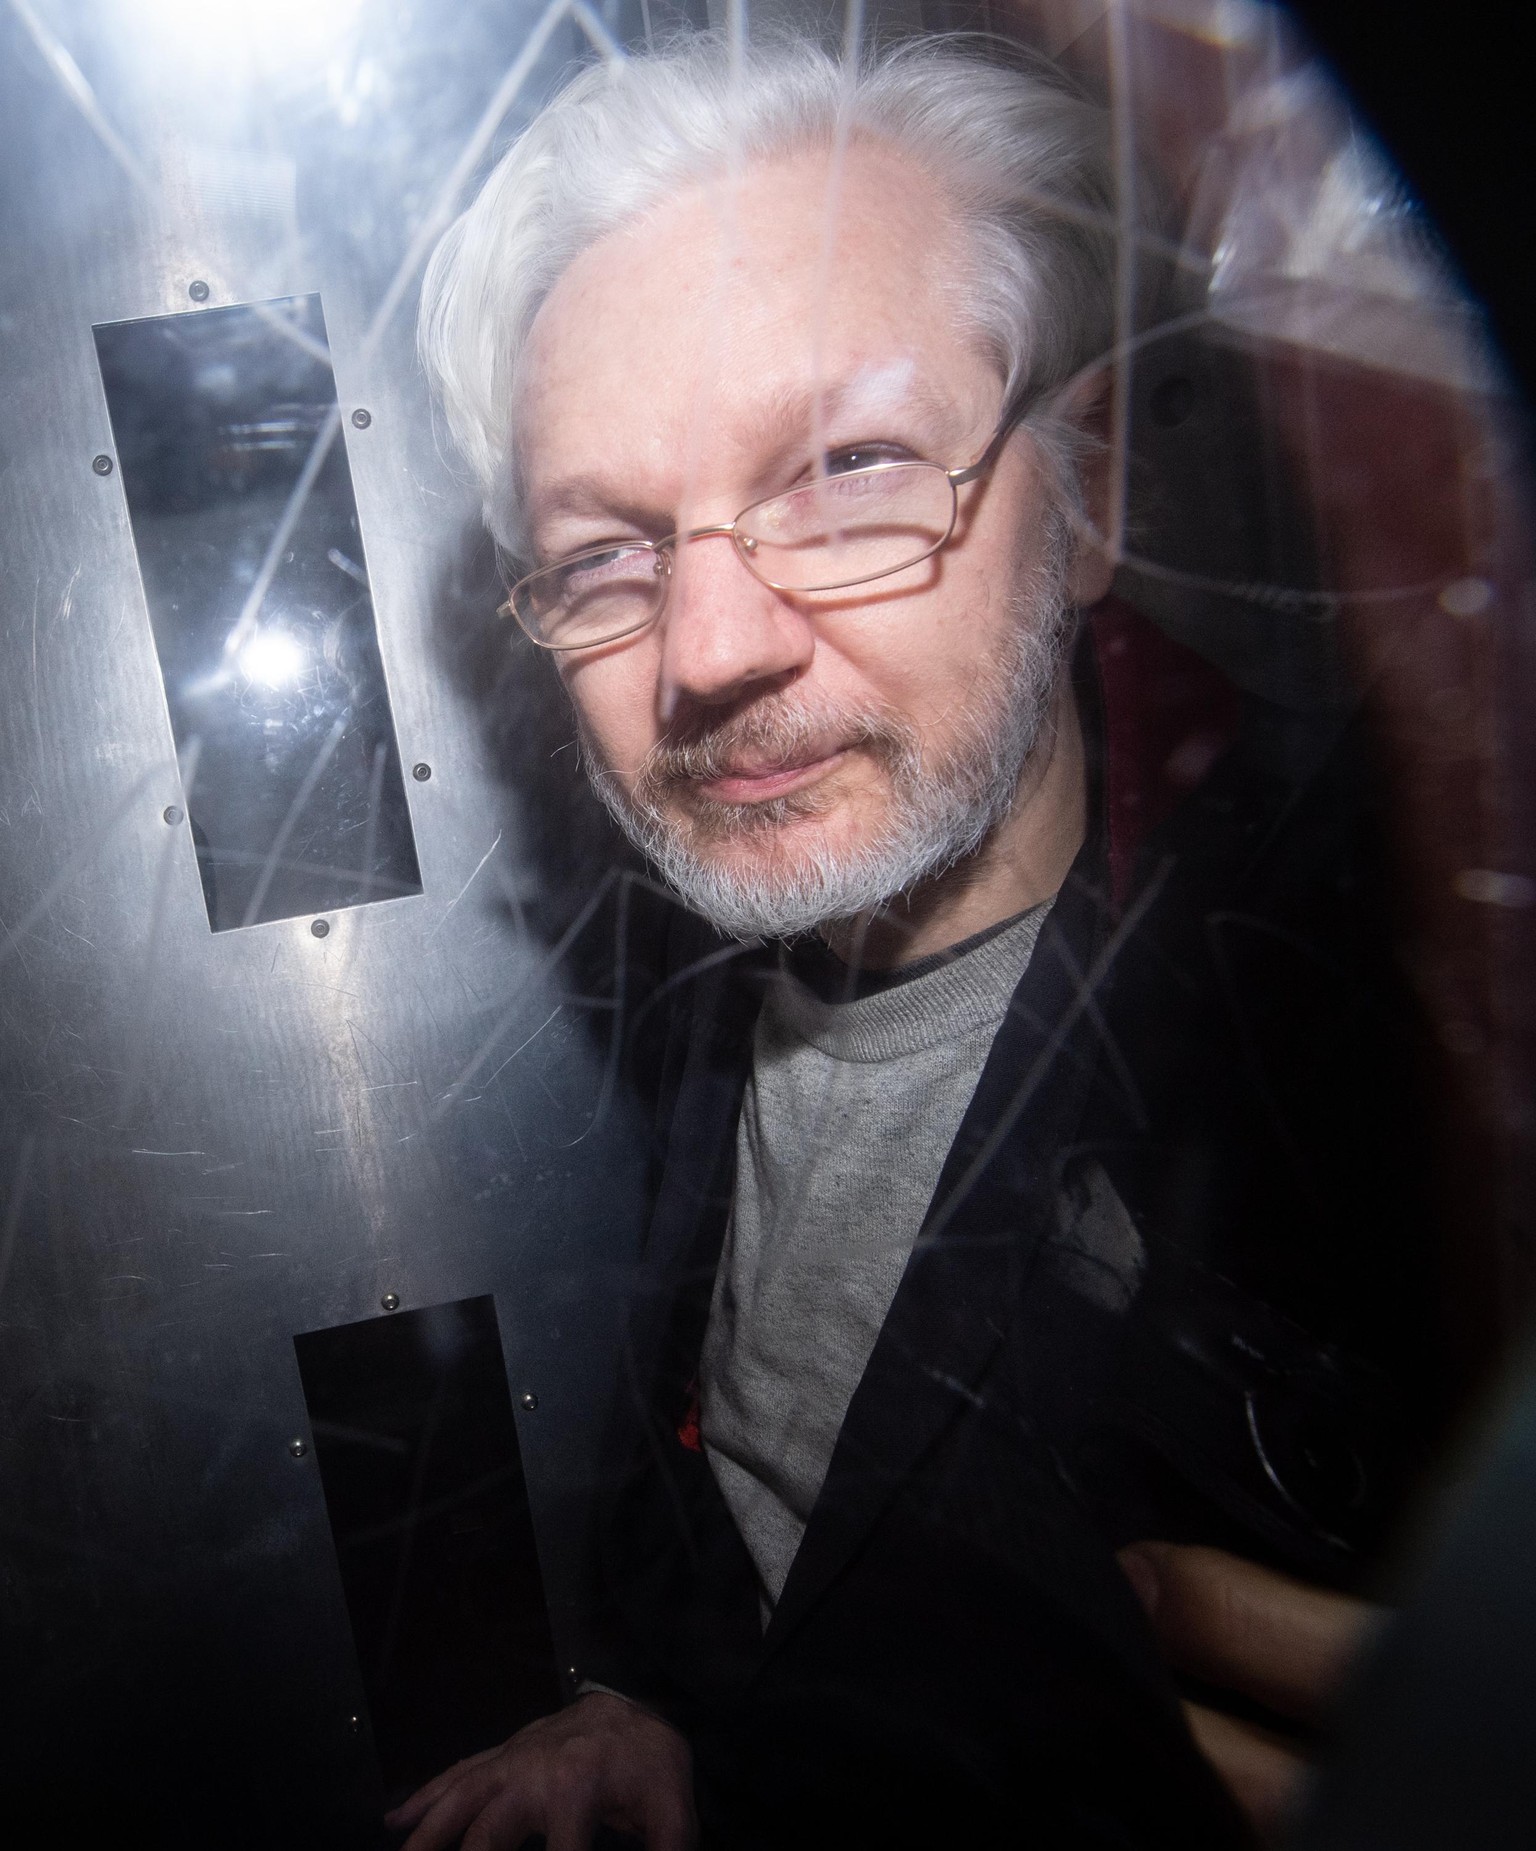 Wikileaks-Gründer Julian Assange droht in den USA eine lebenslange Haftstrafe.